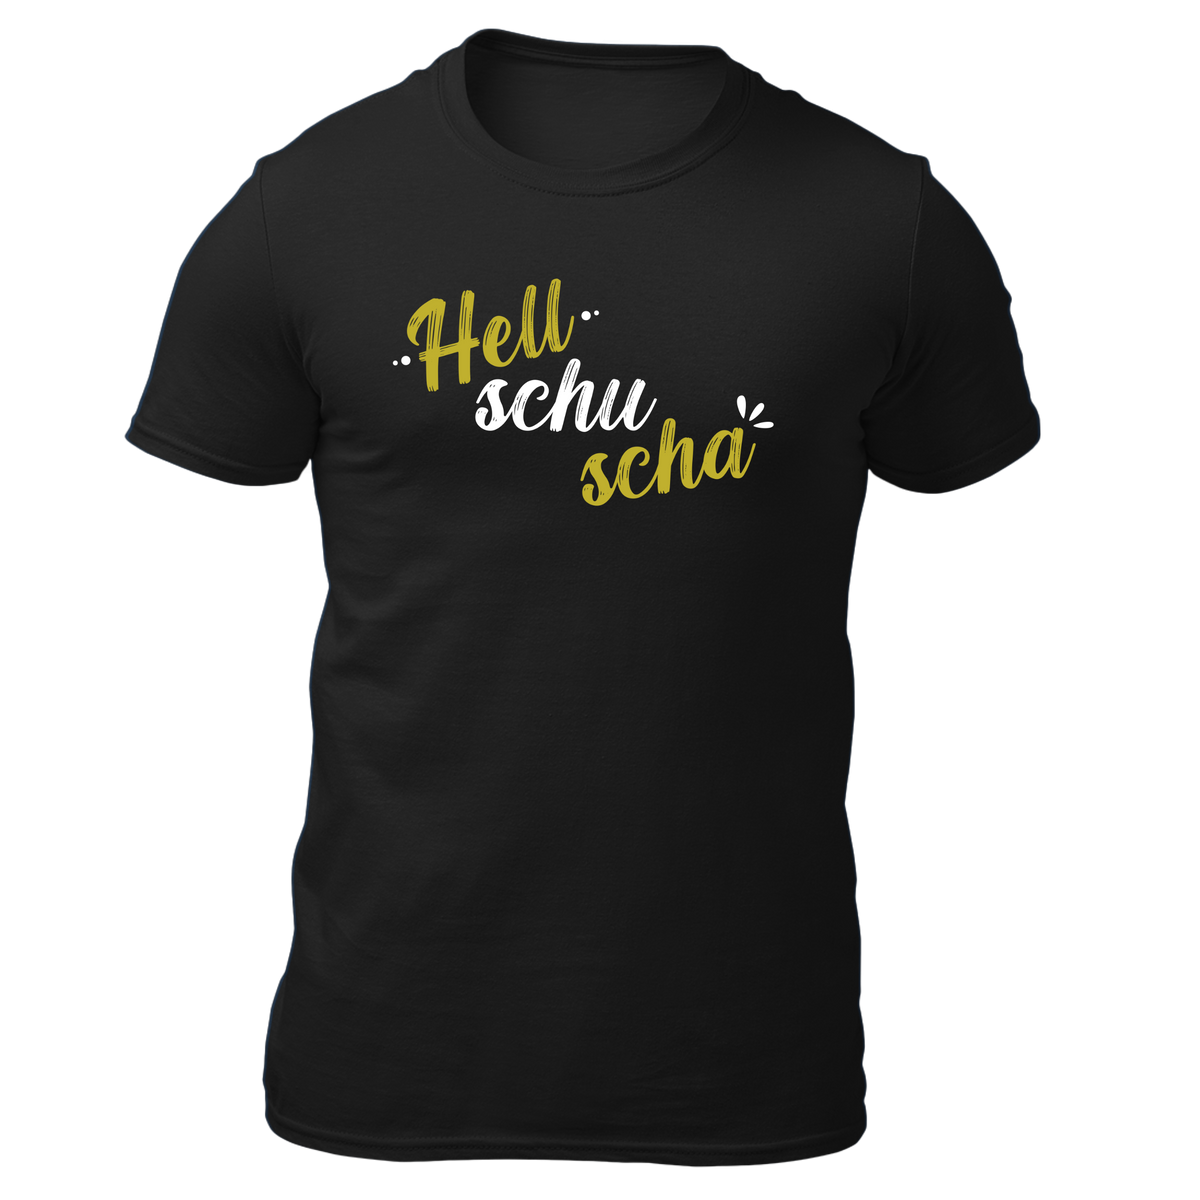 Hell schu scha - Herren Shirt Bio